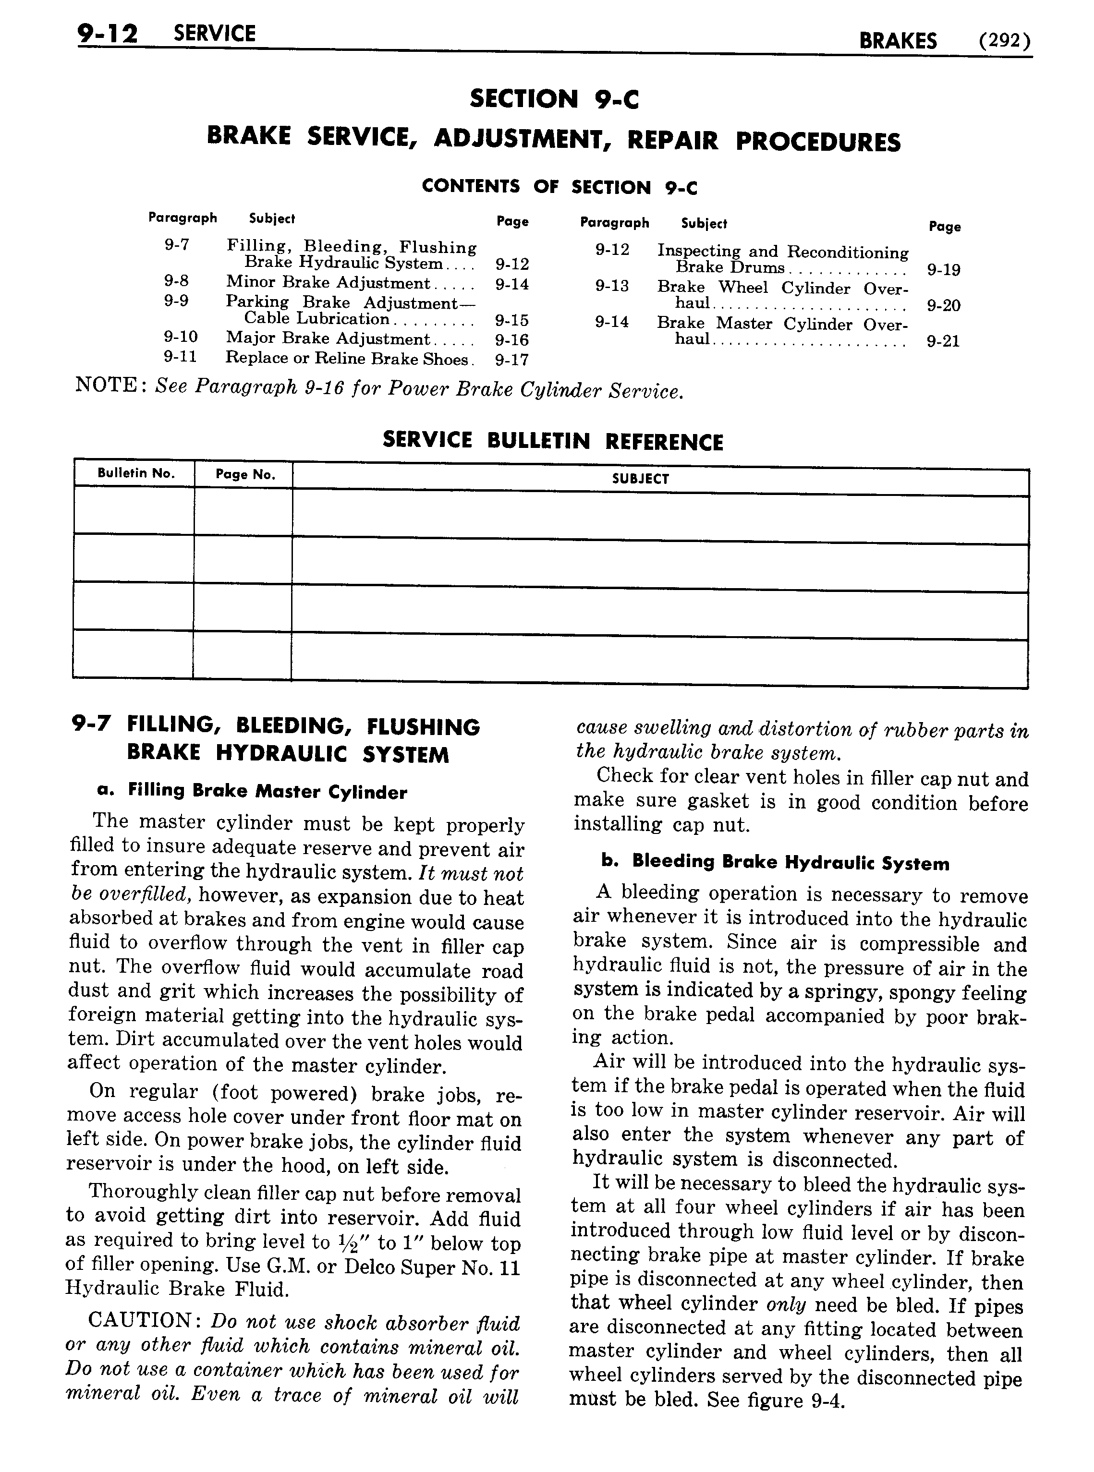 n_10 1954 Buick Shop Manual - Brakes-012-012.jpg